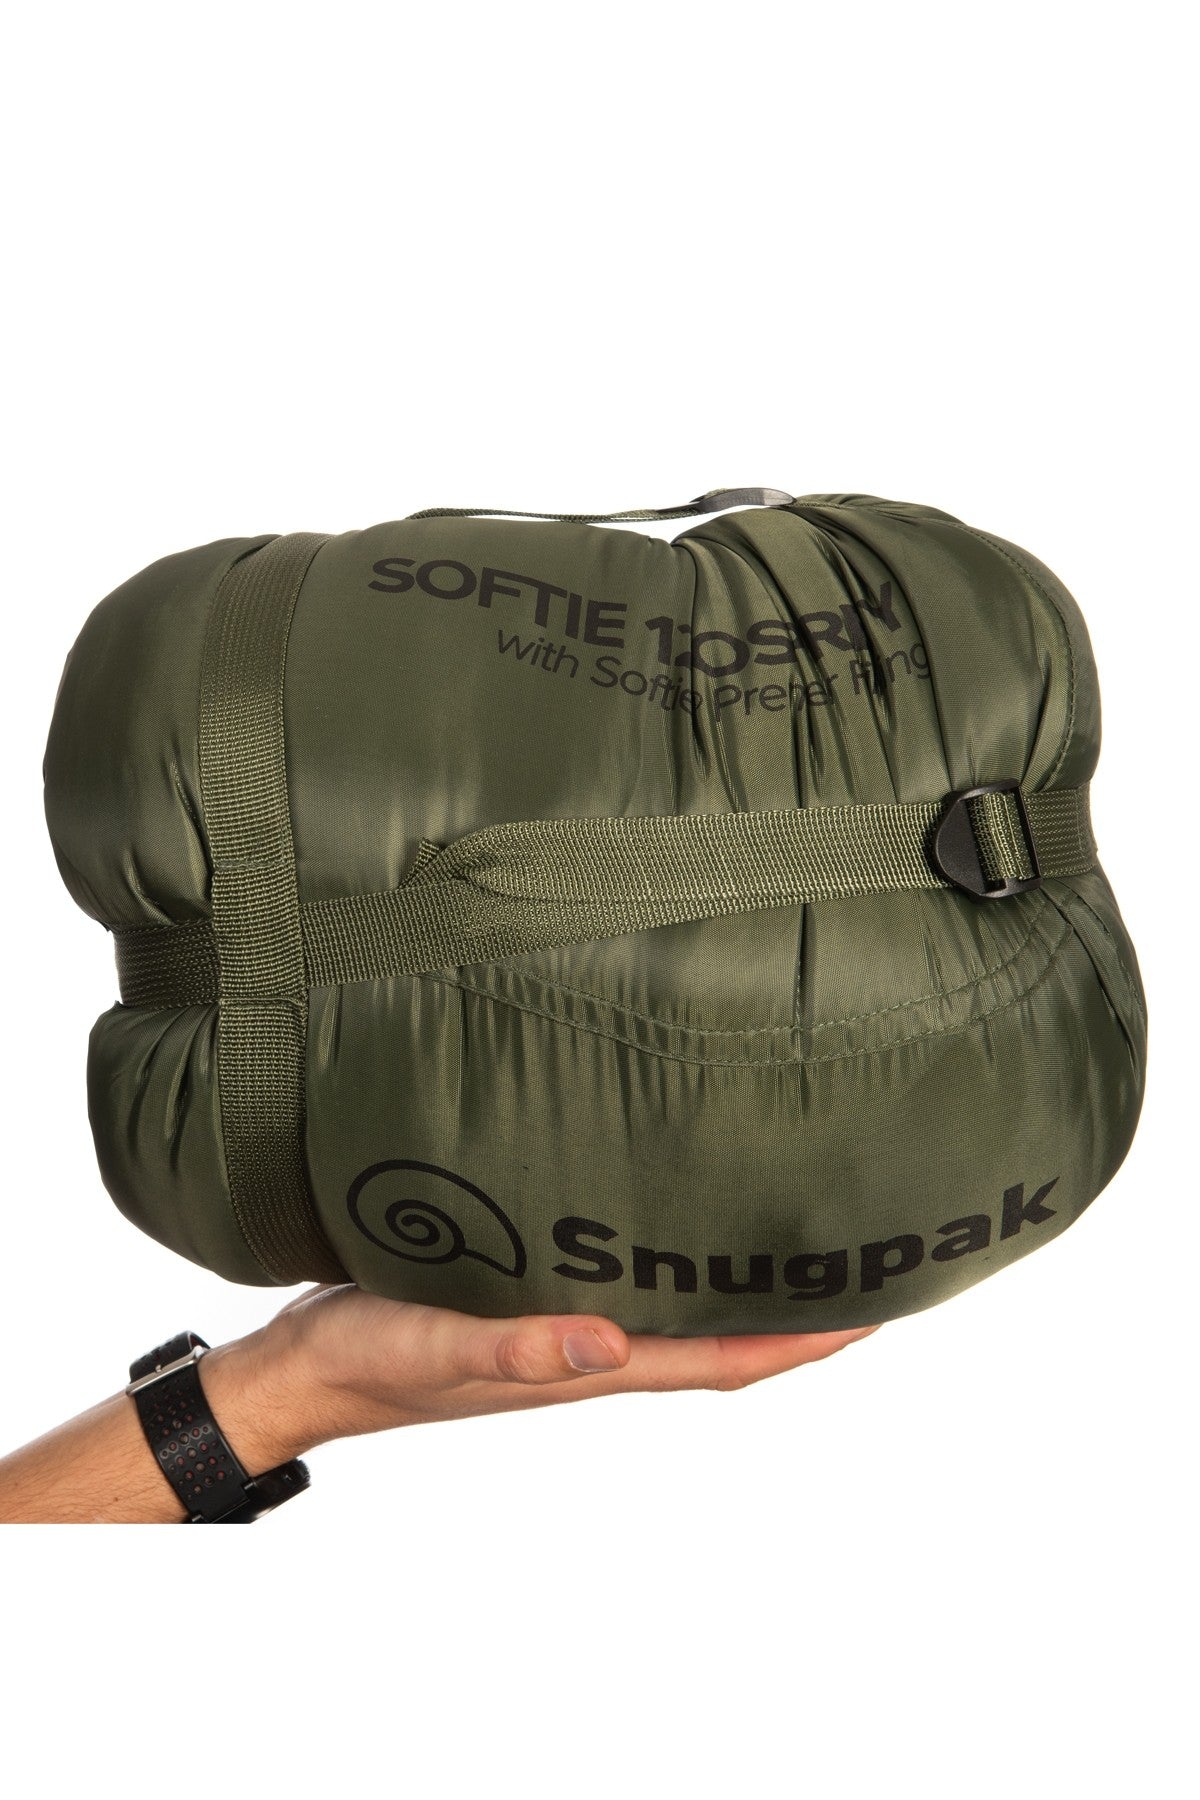 SNUGPAK SOFTIE 12 OSPREY SLEEPING BAG - GREEN, PACKED